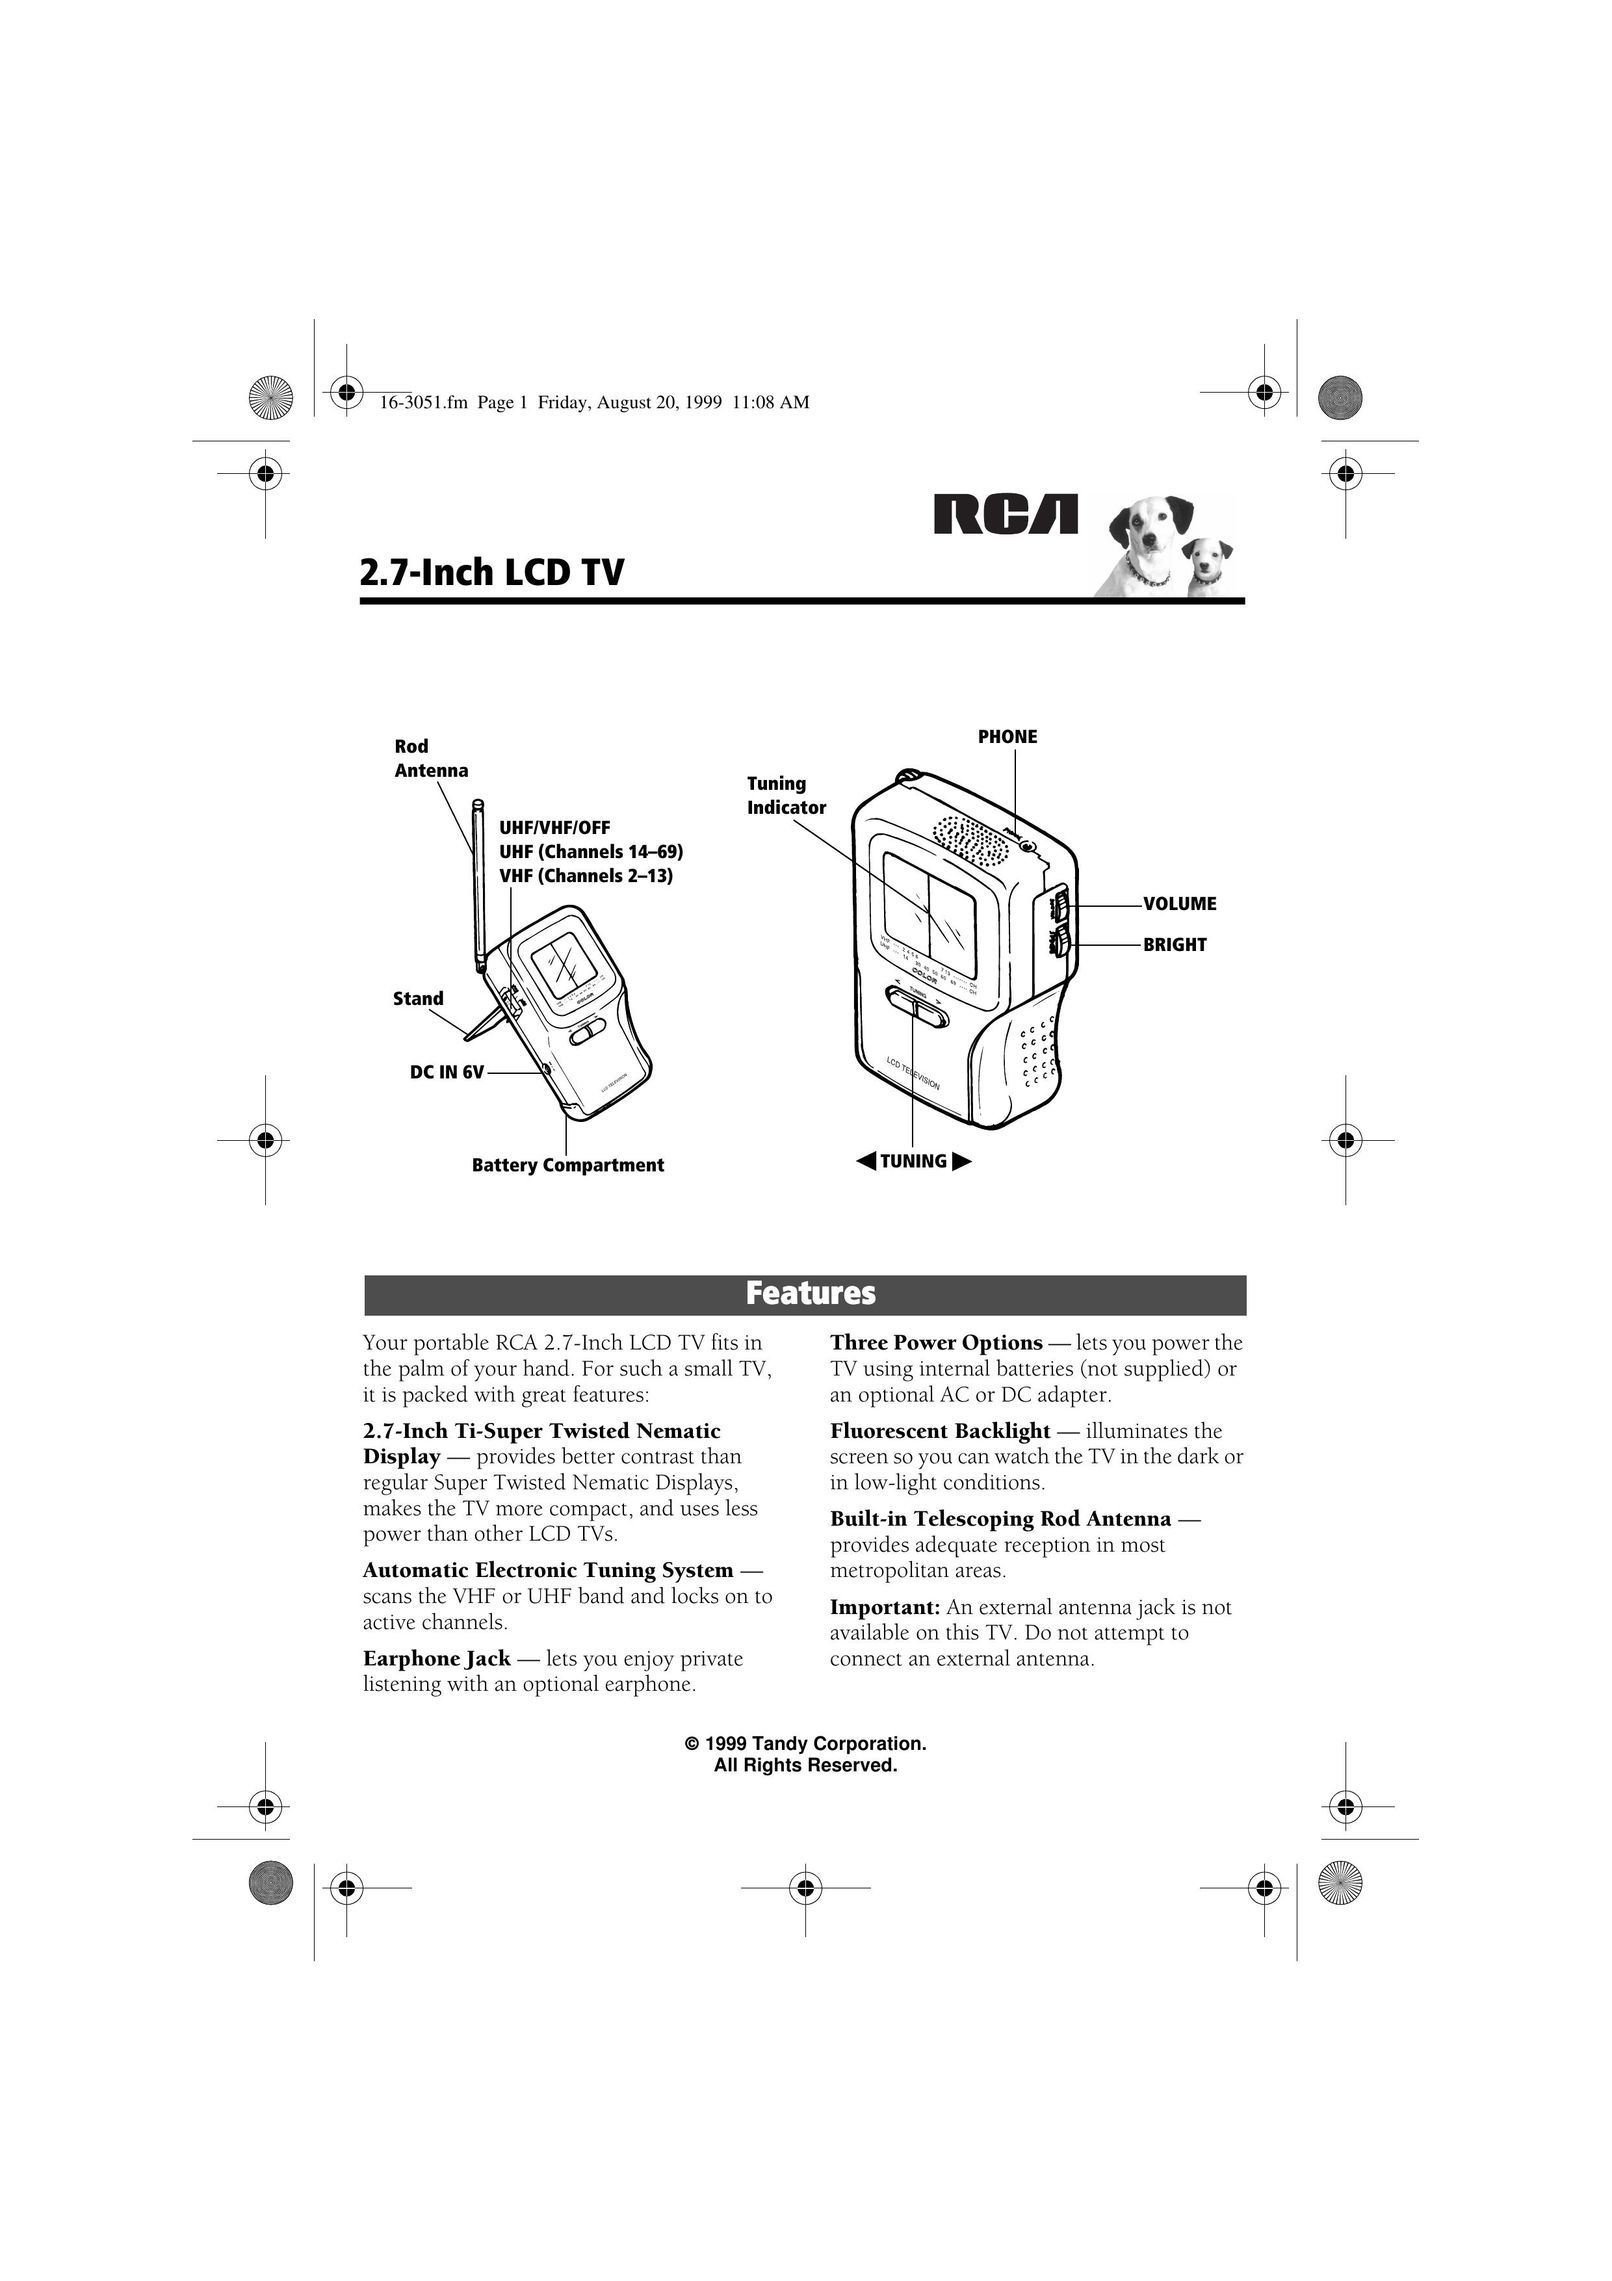 Radio Shack 16-3051 Flat Panel Television User Manual